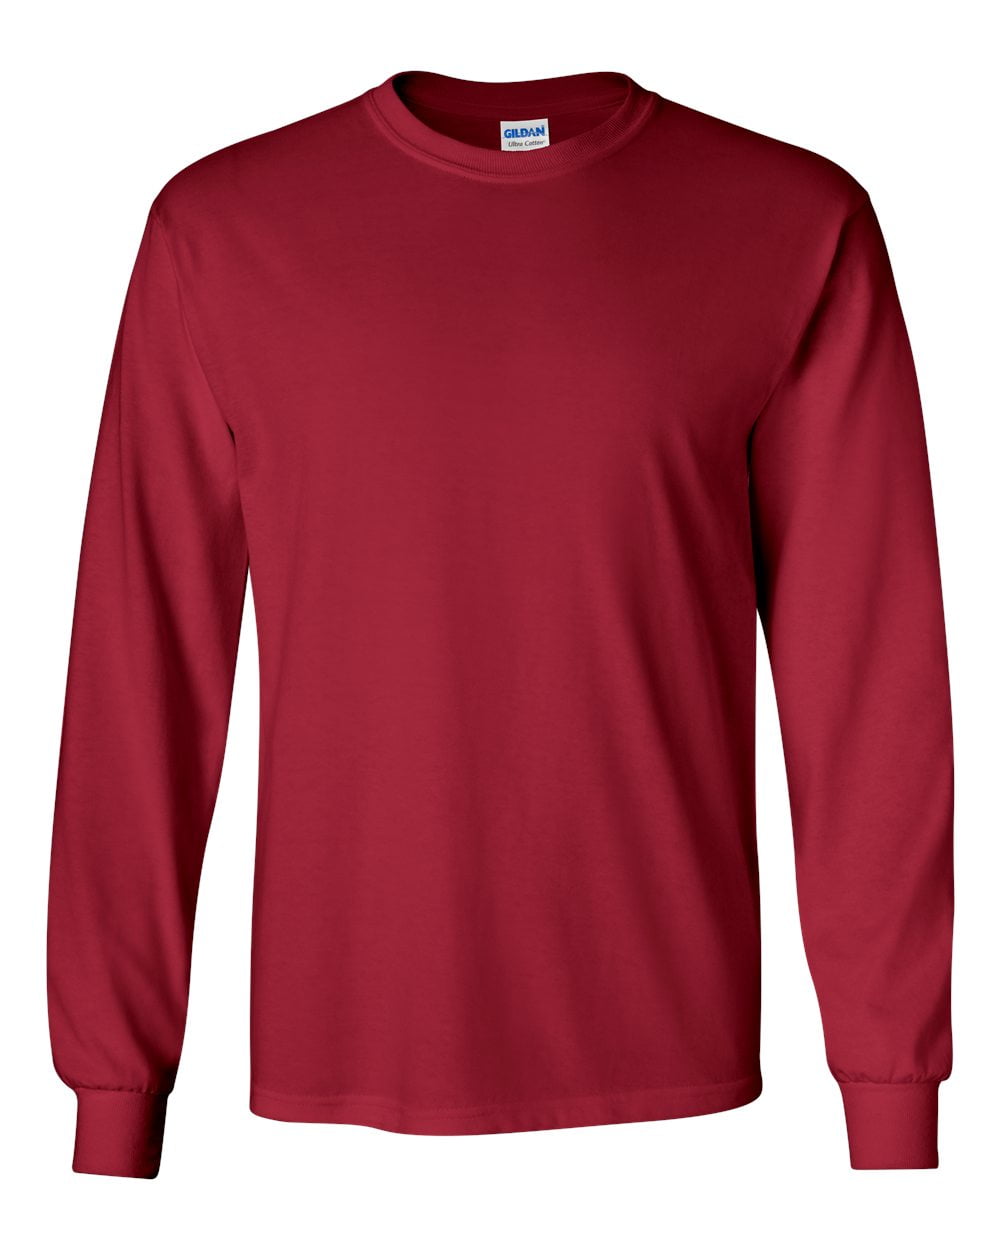 Gildan Ultra Cotton Long Sleeve T-Shirt for Men Size up to 5XL